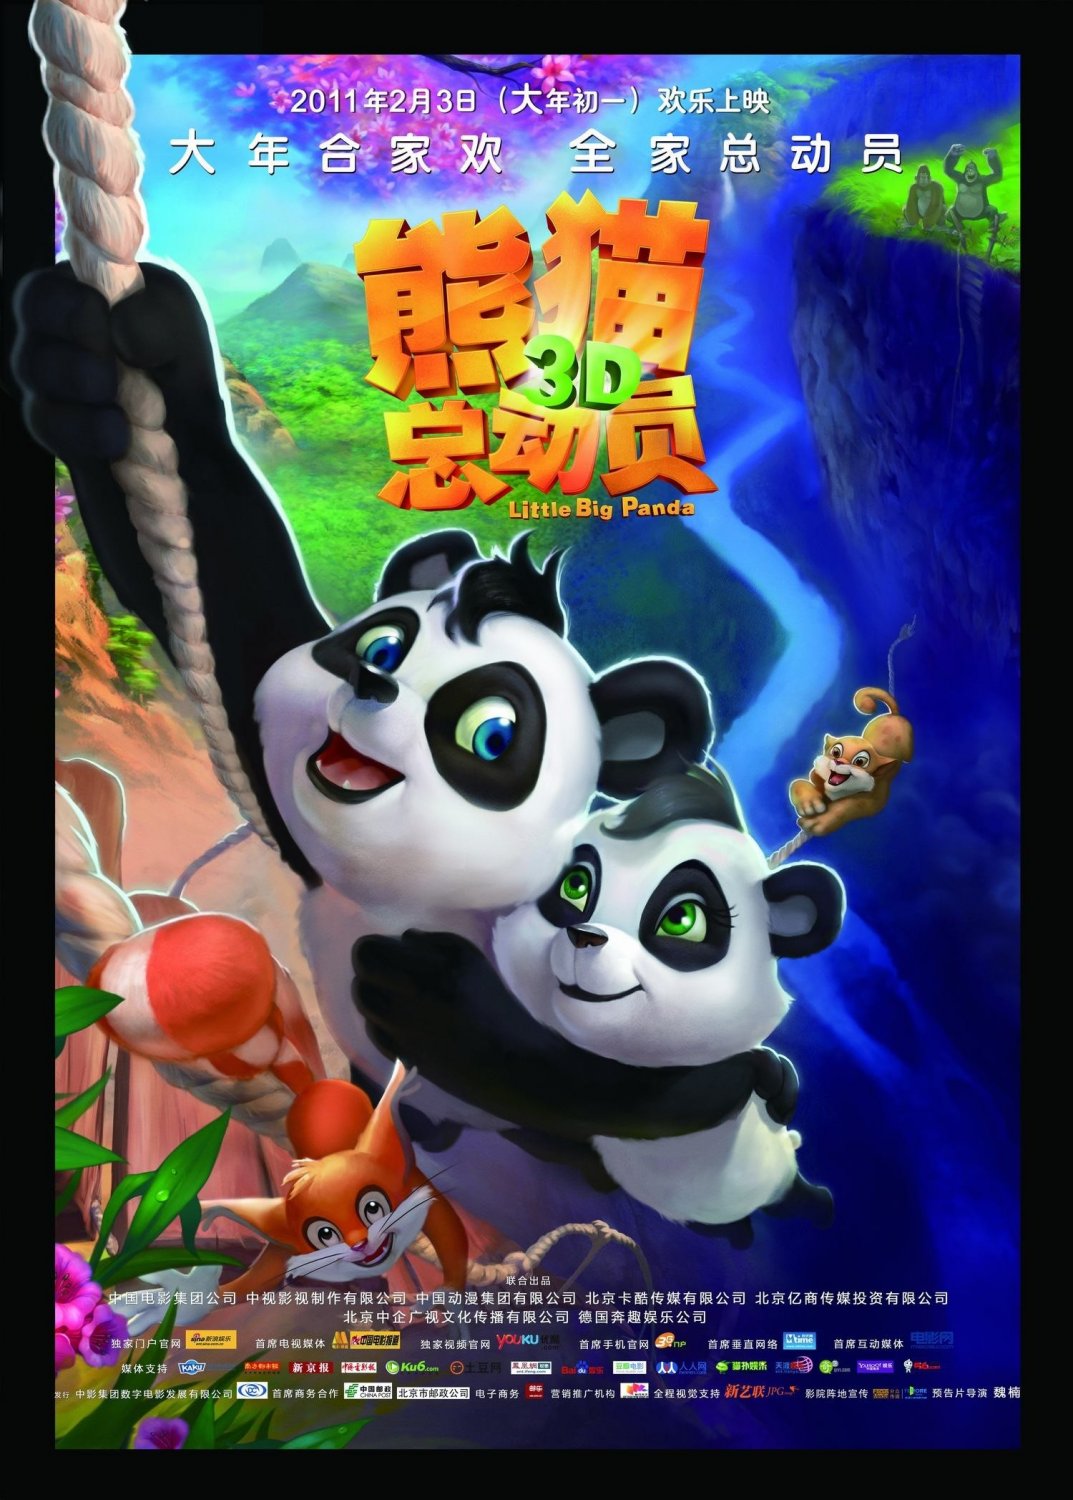 Little Big Panda movie